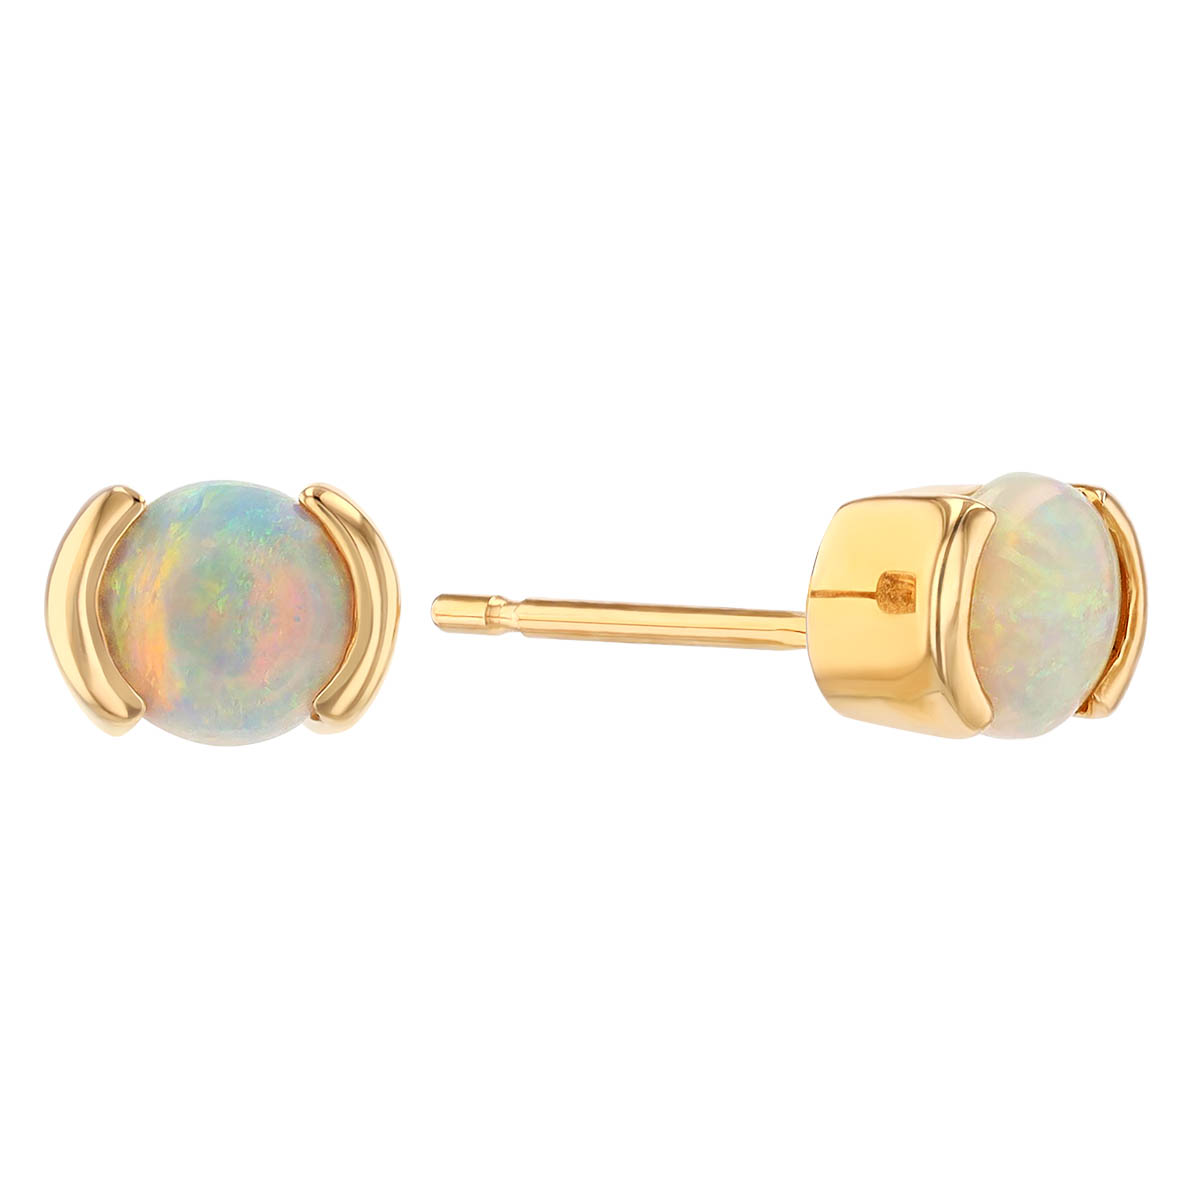 Shop Natural Opal Earrings in 14k Gold Online  Chordia Jewels